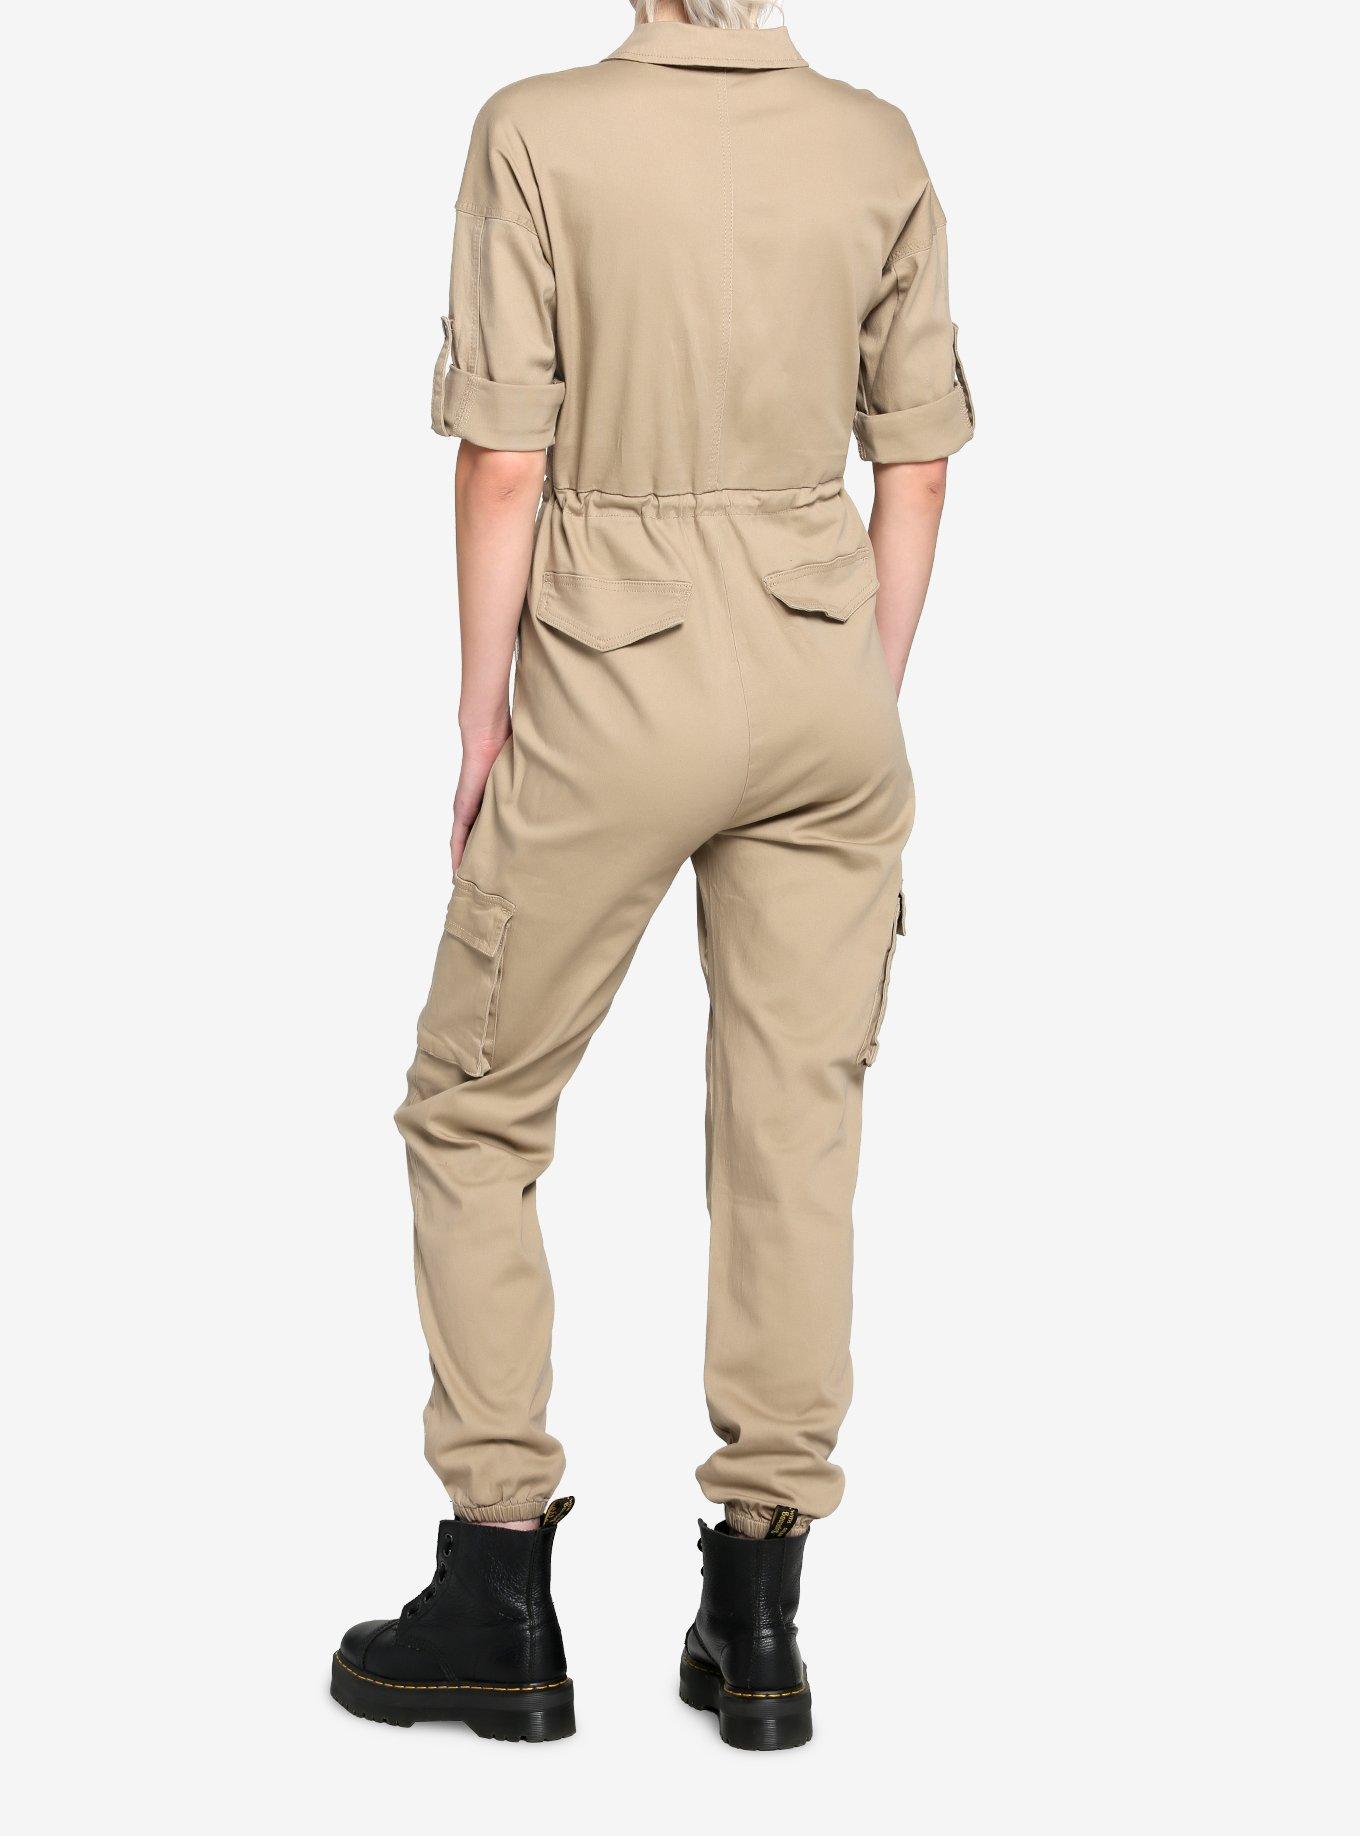 Tan Utility Pocket Jumpsuit, BROWN, alternate